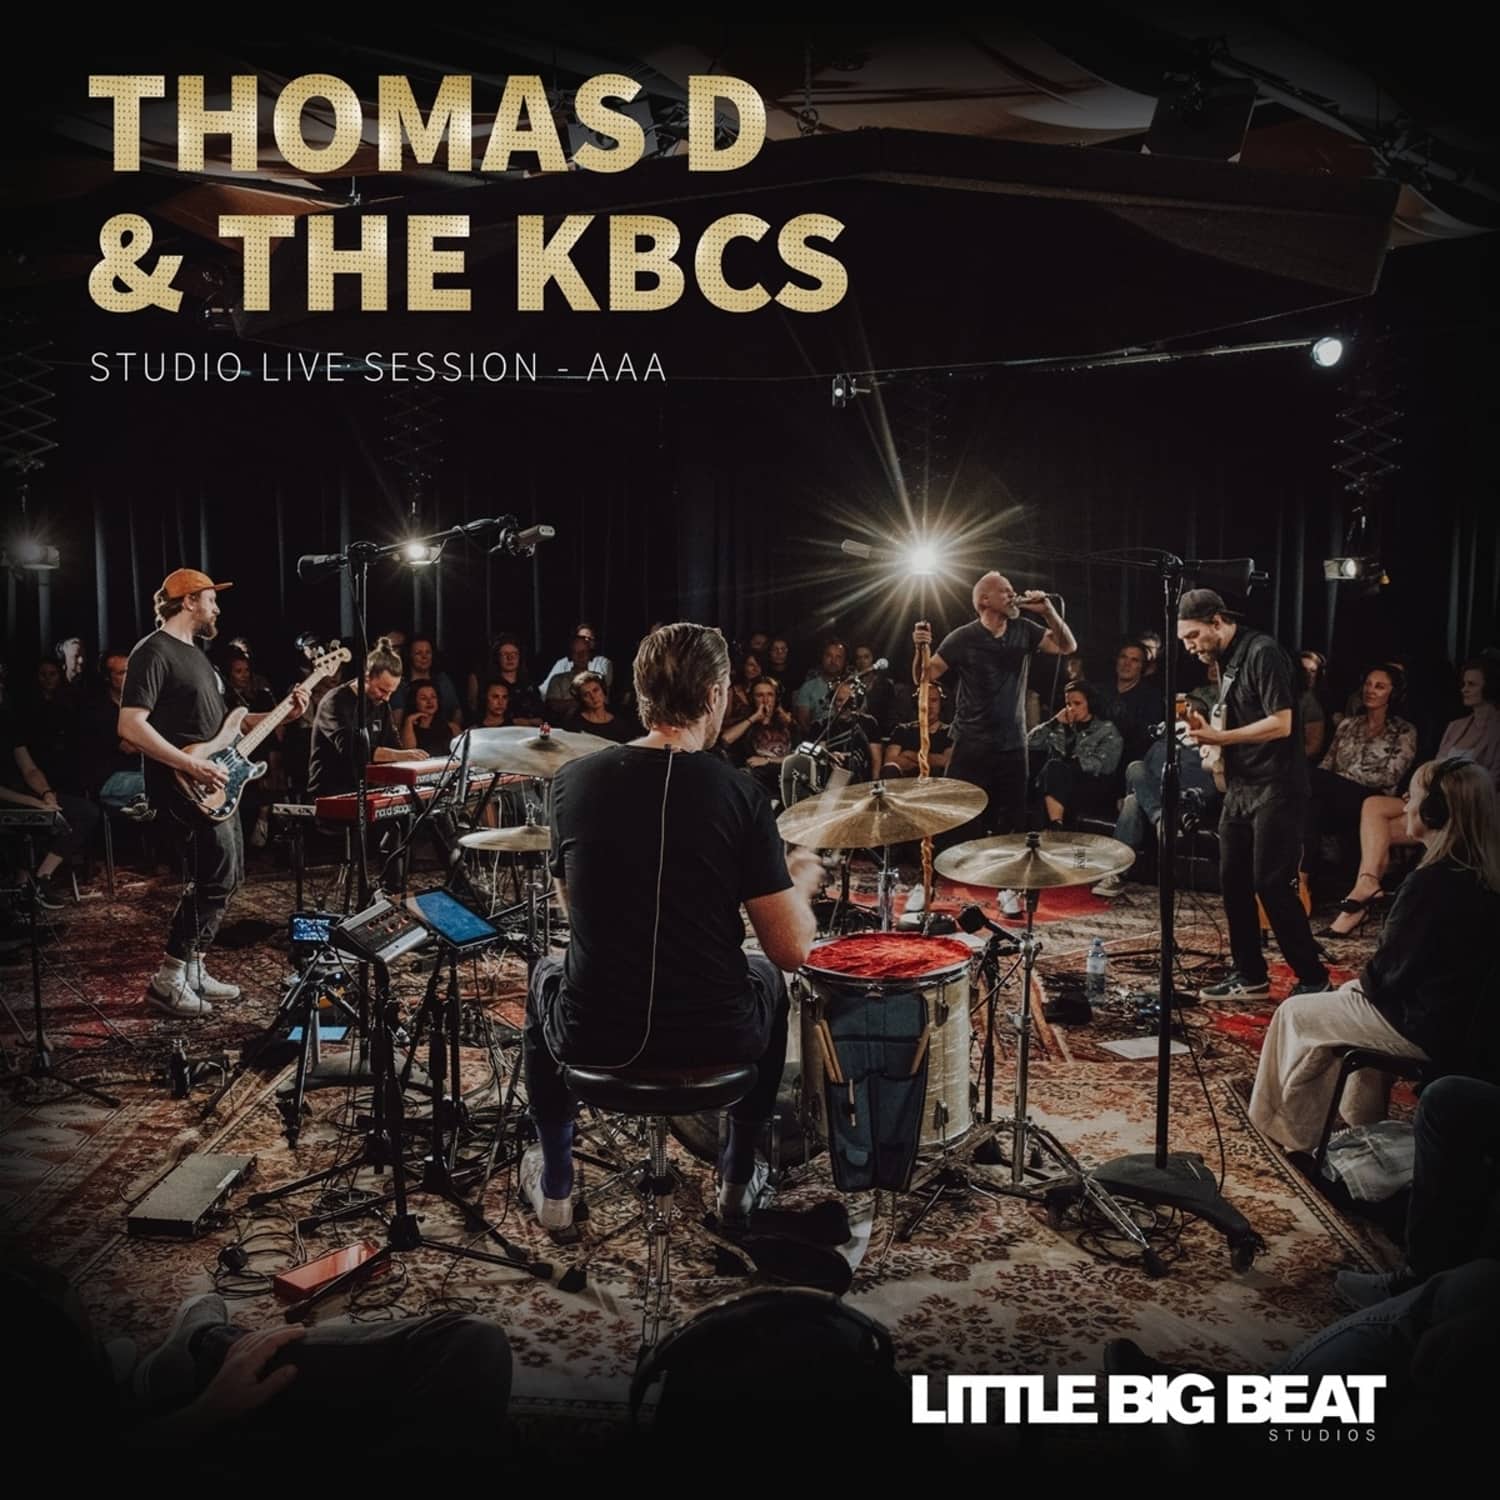 Thomas D & The KBCS - LITTLE BIG BEAT STUDIO LIVE SESSION 